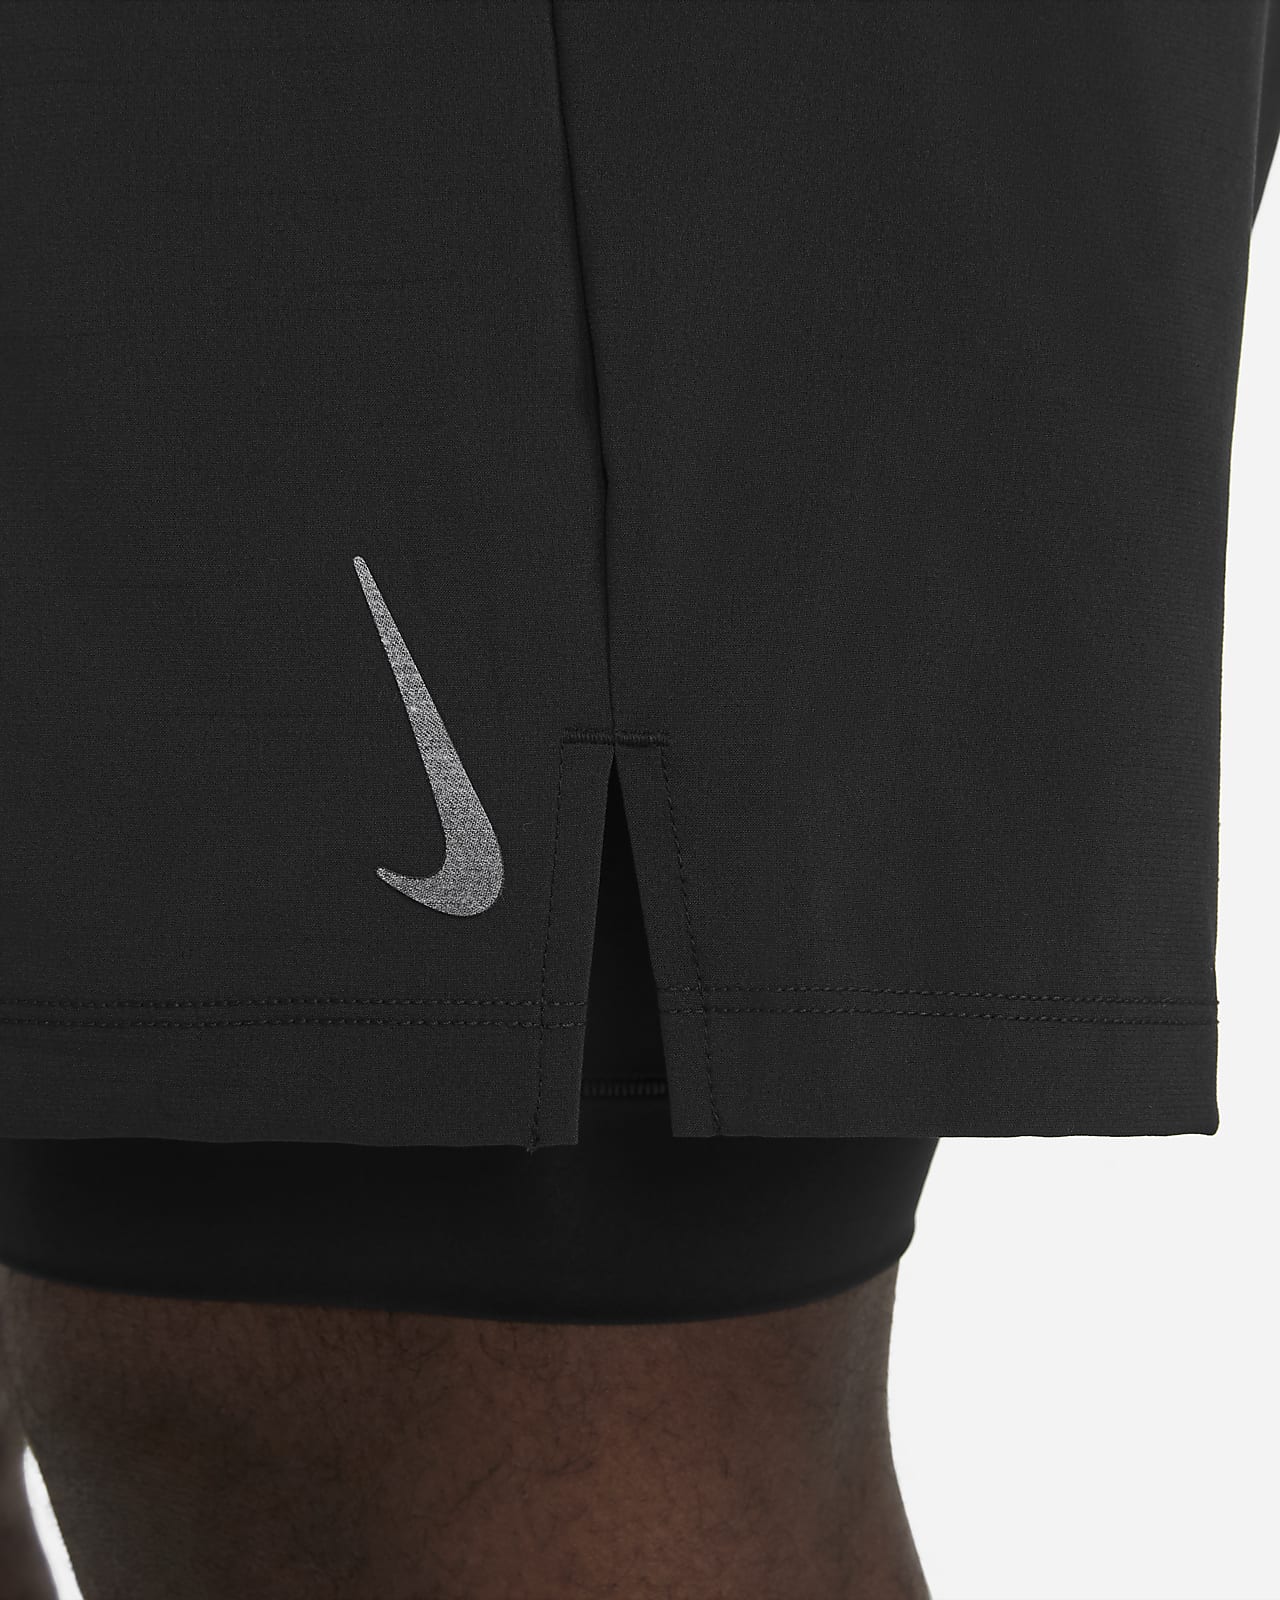 Antemano Existencia paralelo Nike Yoga Pantalón corto 2 en 1 - Hombre. Nike ES